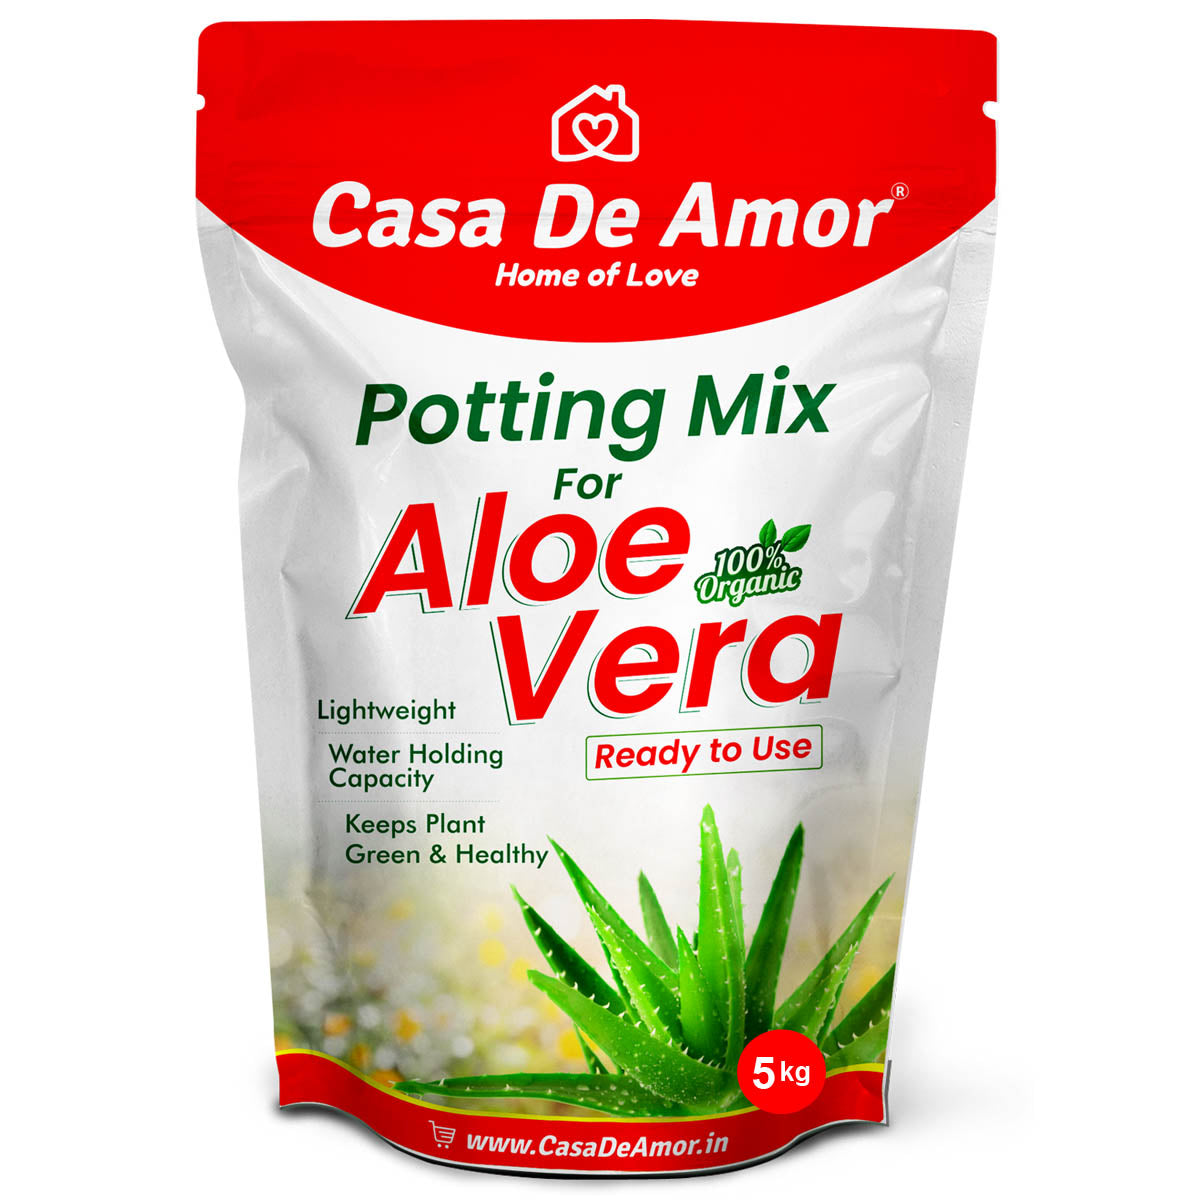 Casa De Amor Aloe Vera Potting Soil Mix, 100% Organic Special Research Based Formula for All Aloe Vera Plants